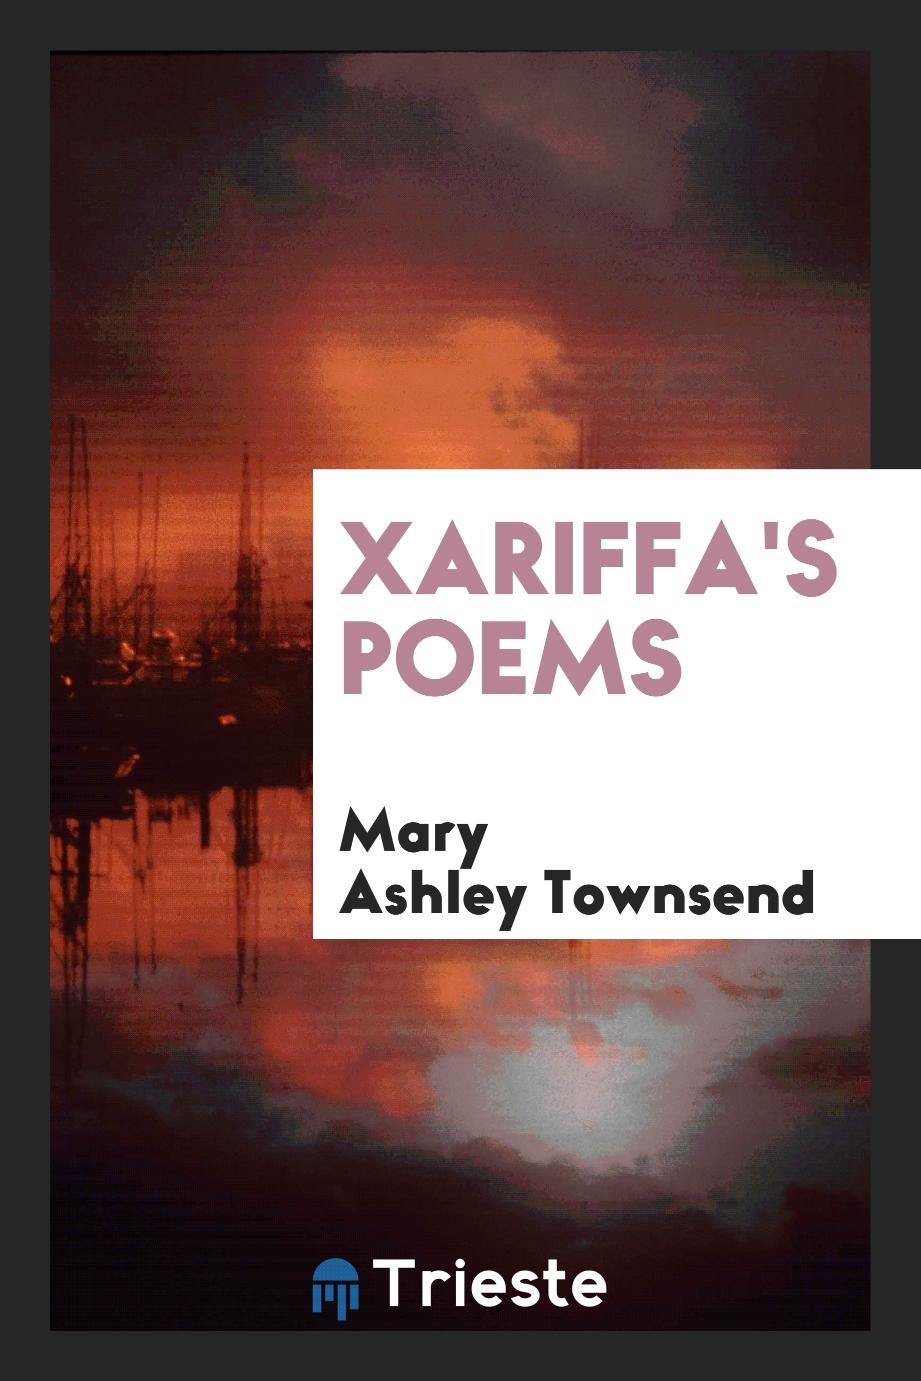 Xariffa's poems